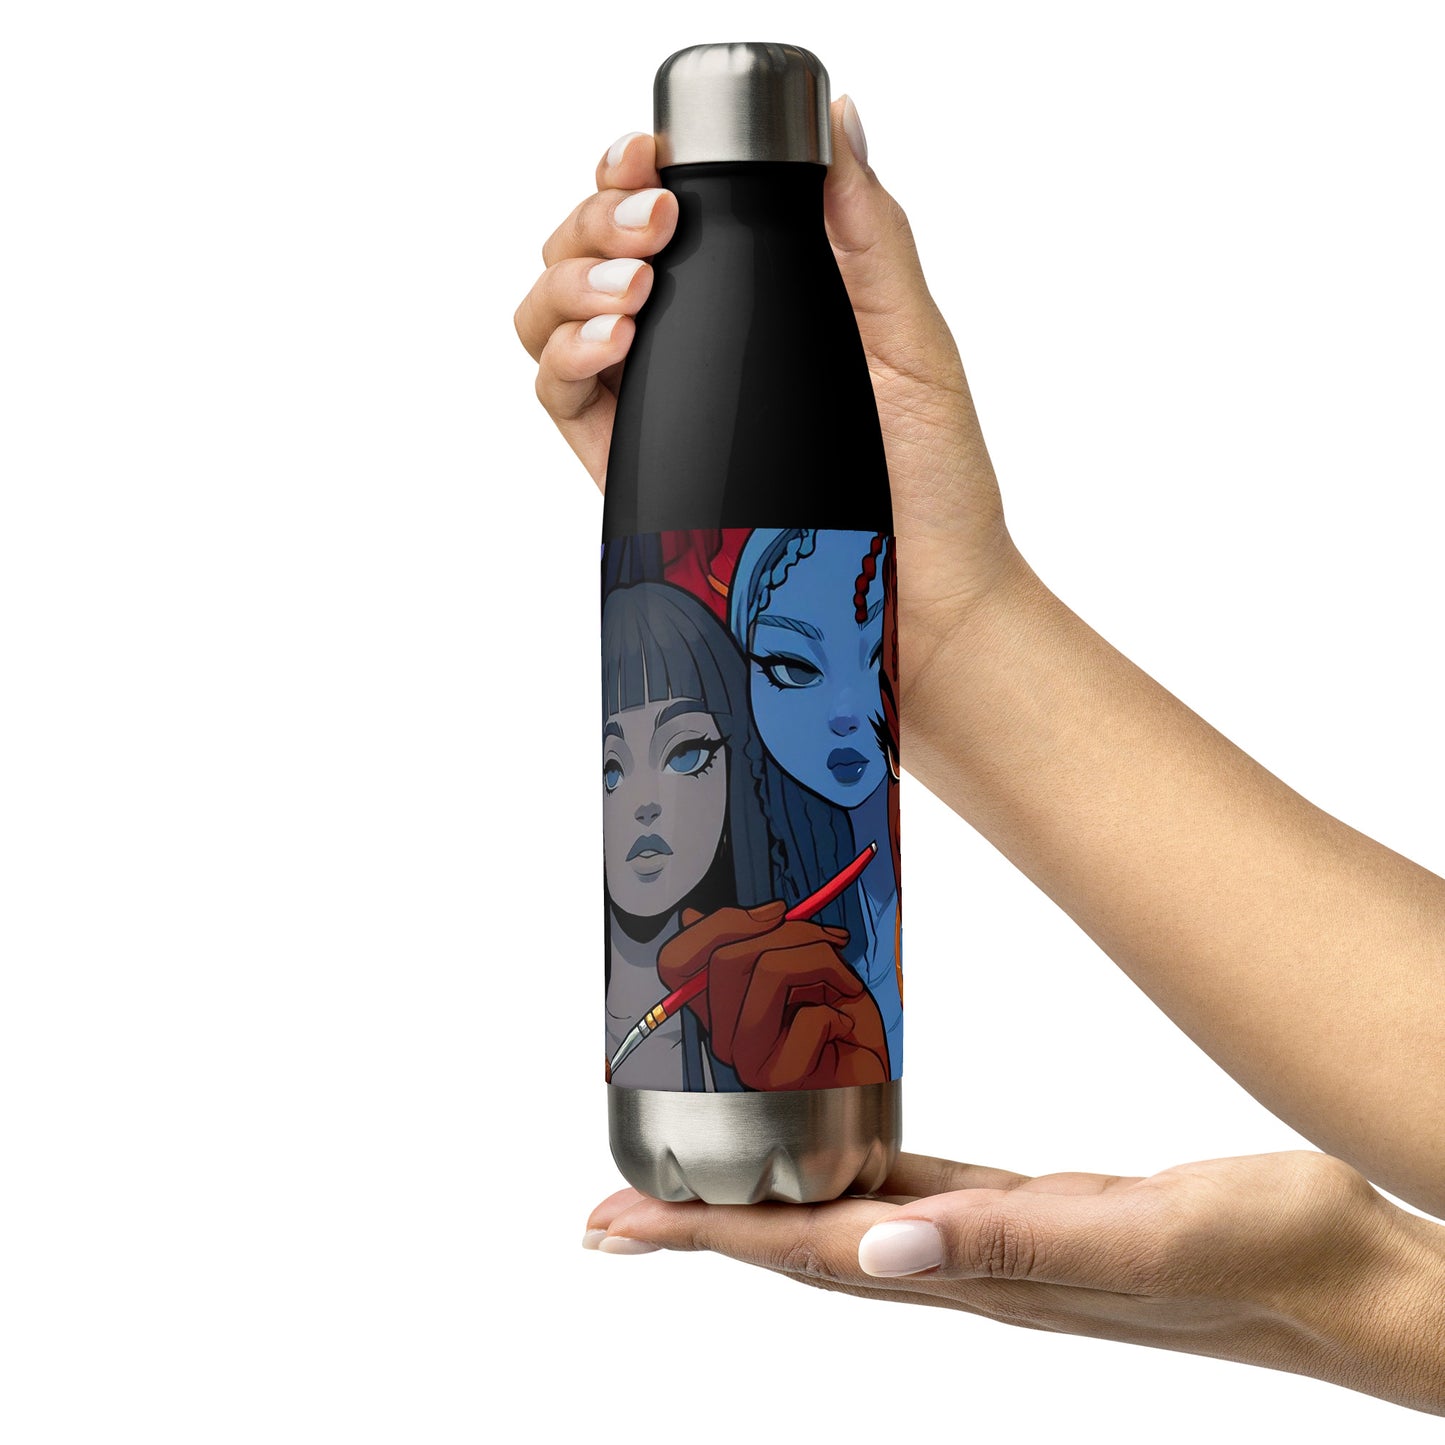 Task Slayerz #2 -Stainless steel water bottle